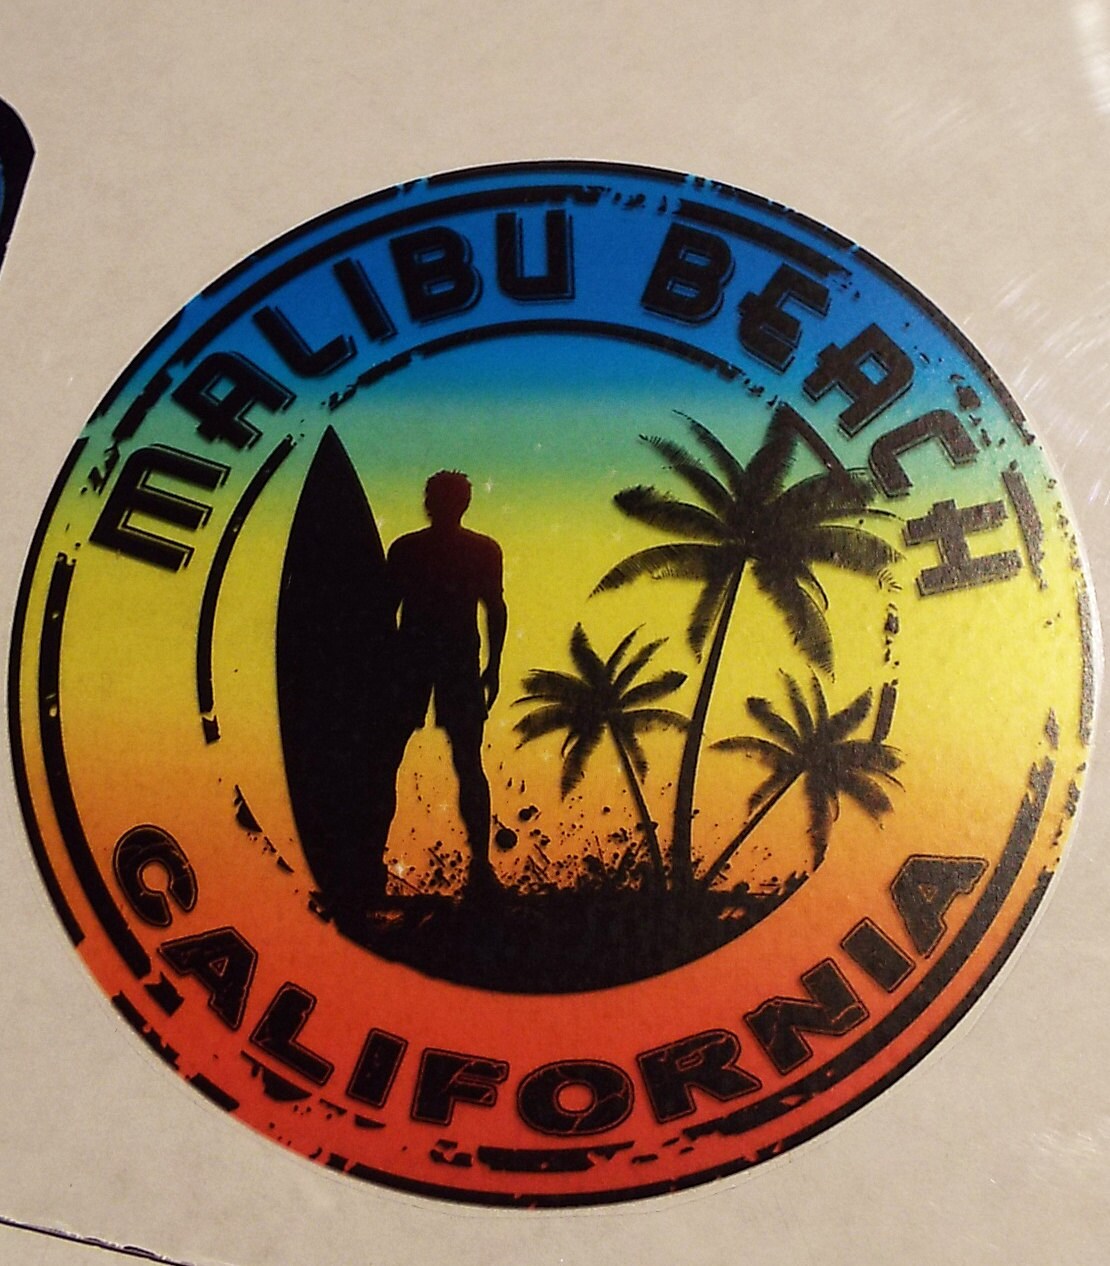 Malibu Beach California Surfing Surfer Waterslide Decal Sticker Transparent 4" x 4" Rainbow Surfboard Palm Trees Water Slide Hippie